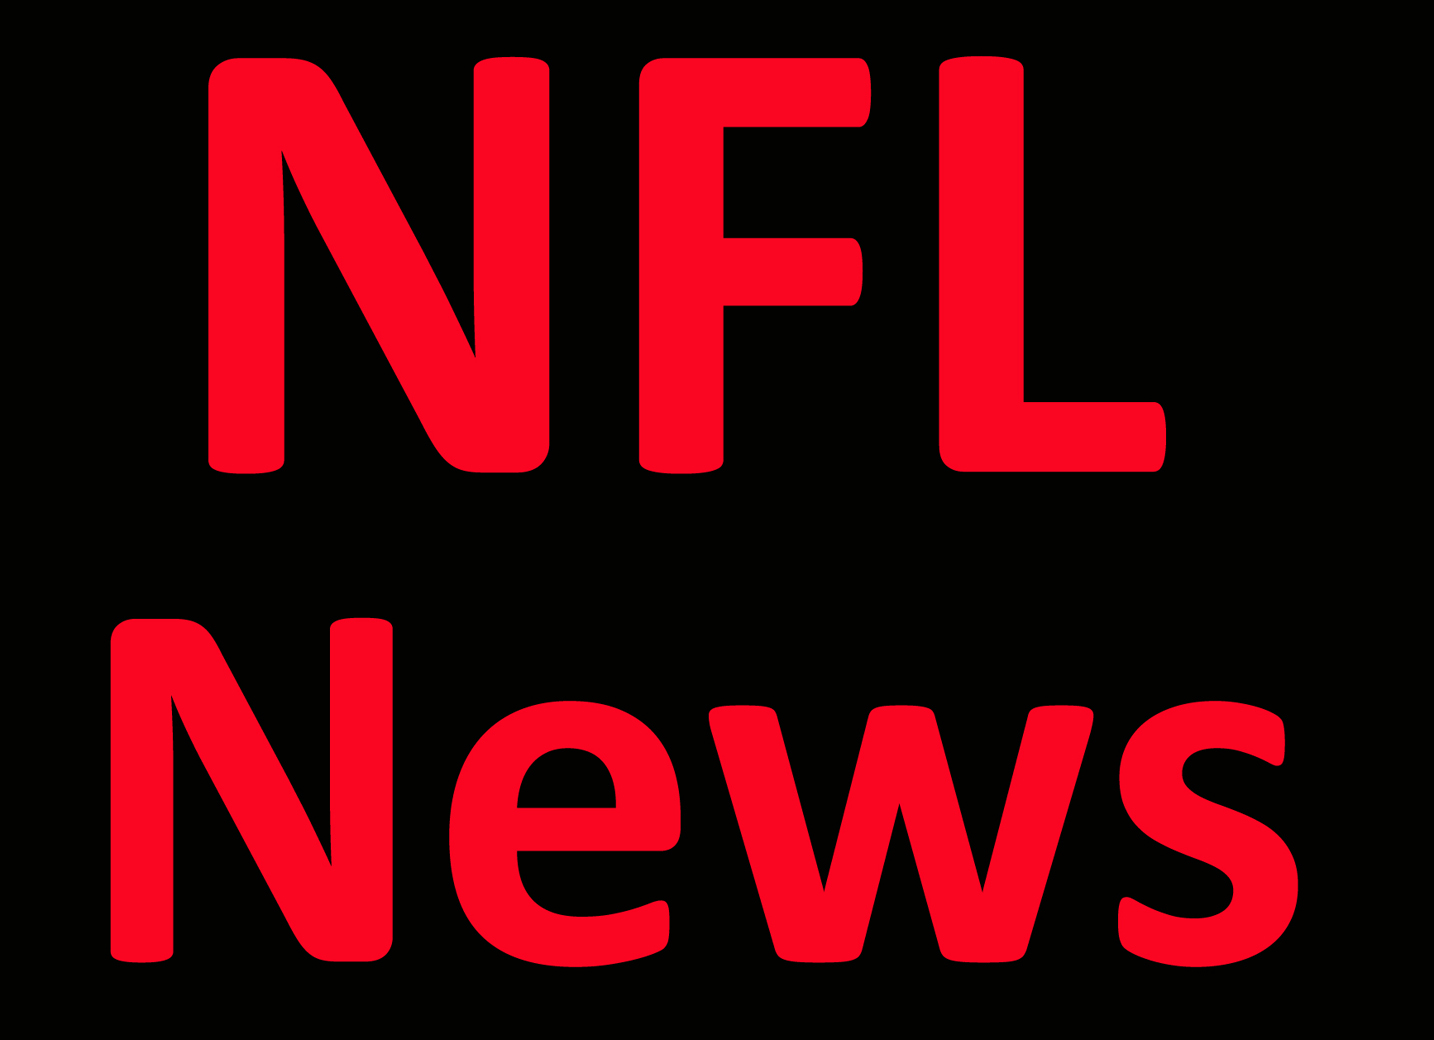 NFL News: Murray magic, fumble return in OT give Cards win Per Report